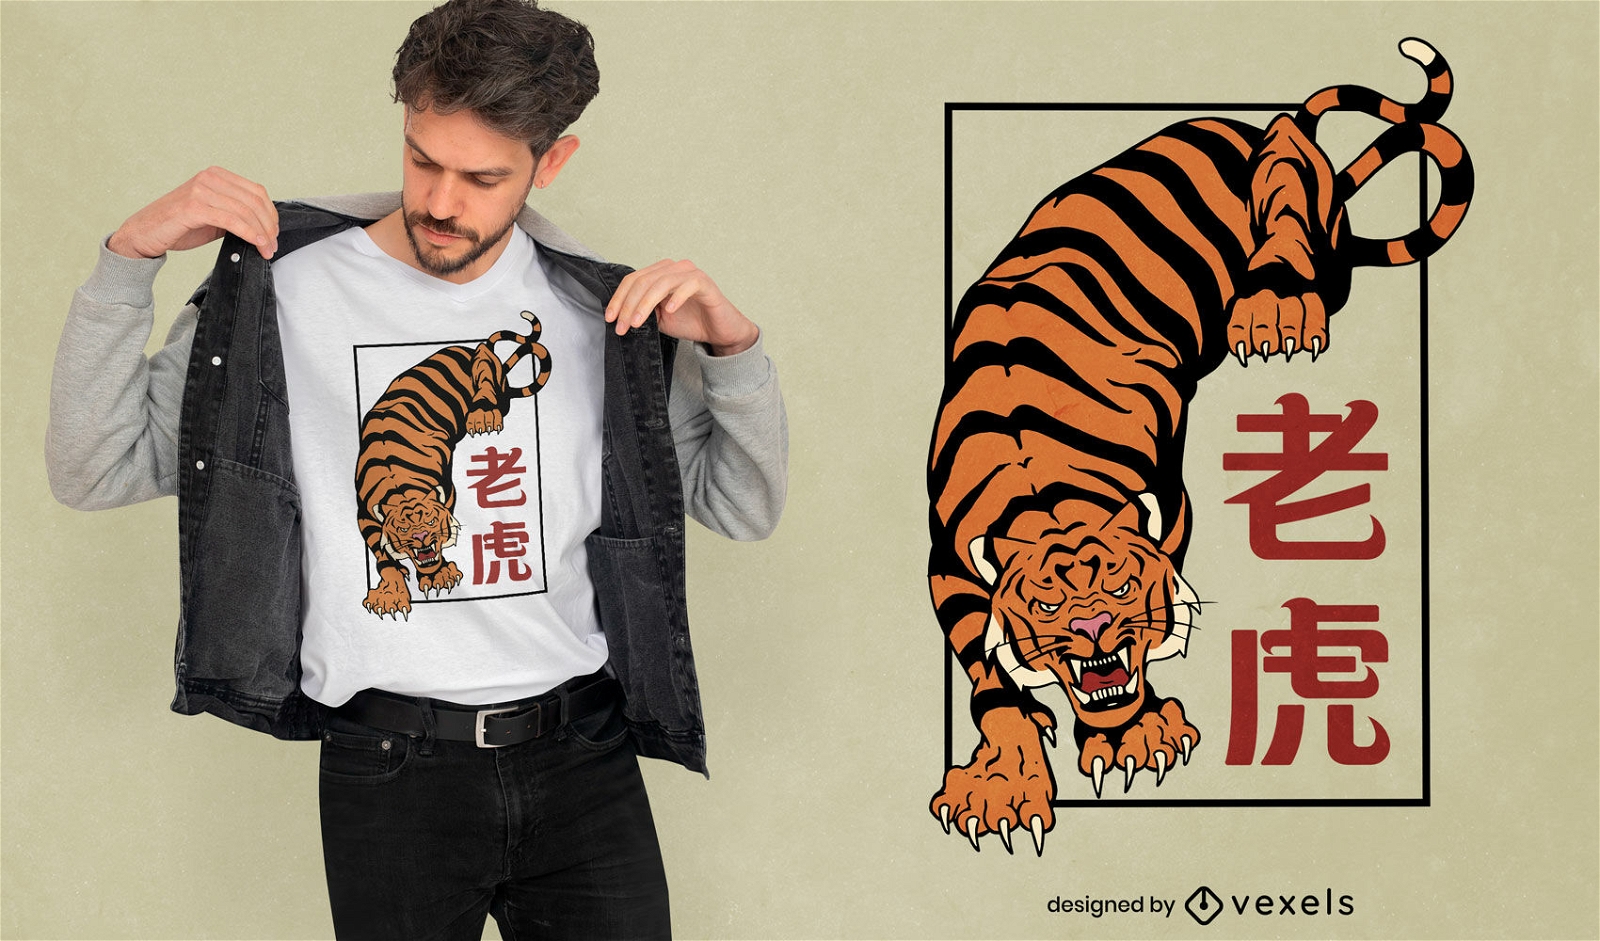 Dise?o de camiseta rugiendo animal tigre.